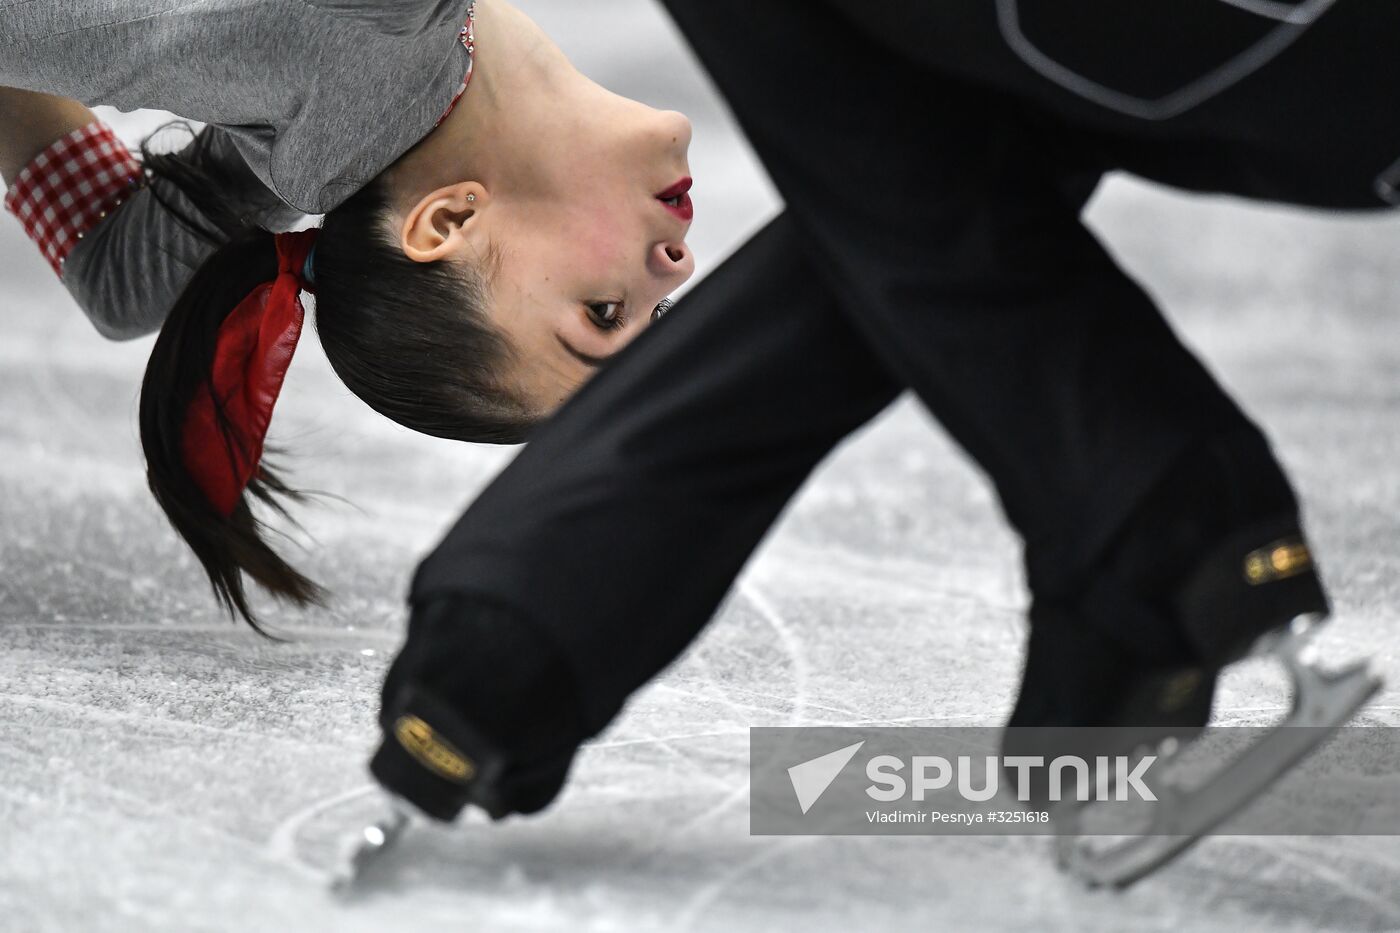 ISU Junior Grand Prix of Figure Skating Final. Pair's short program